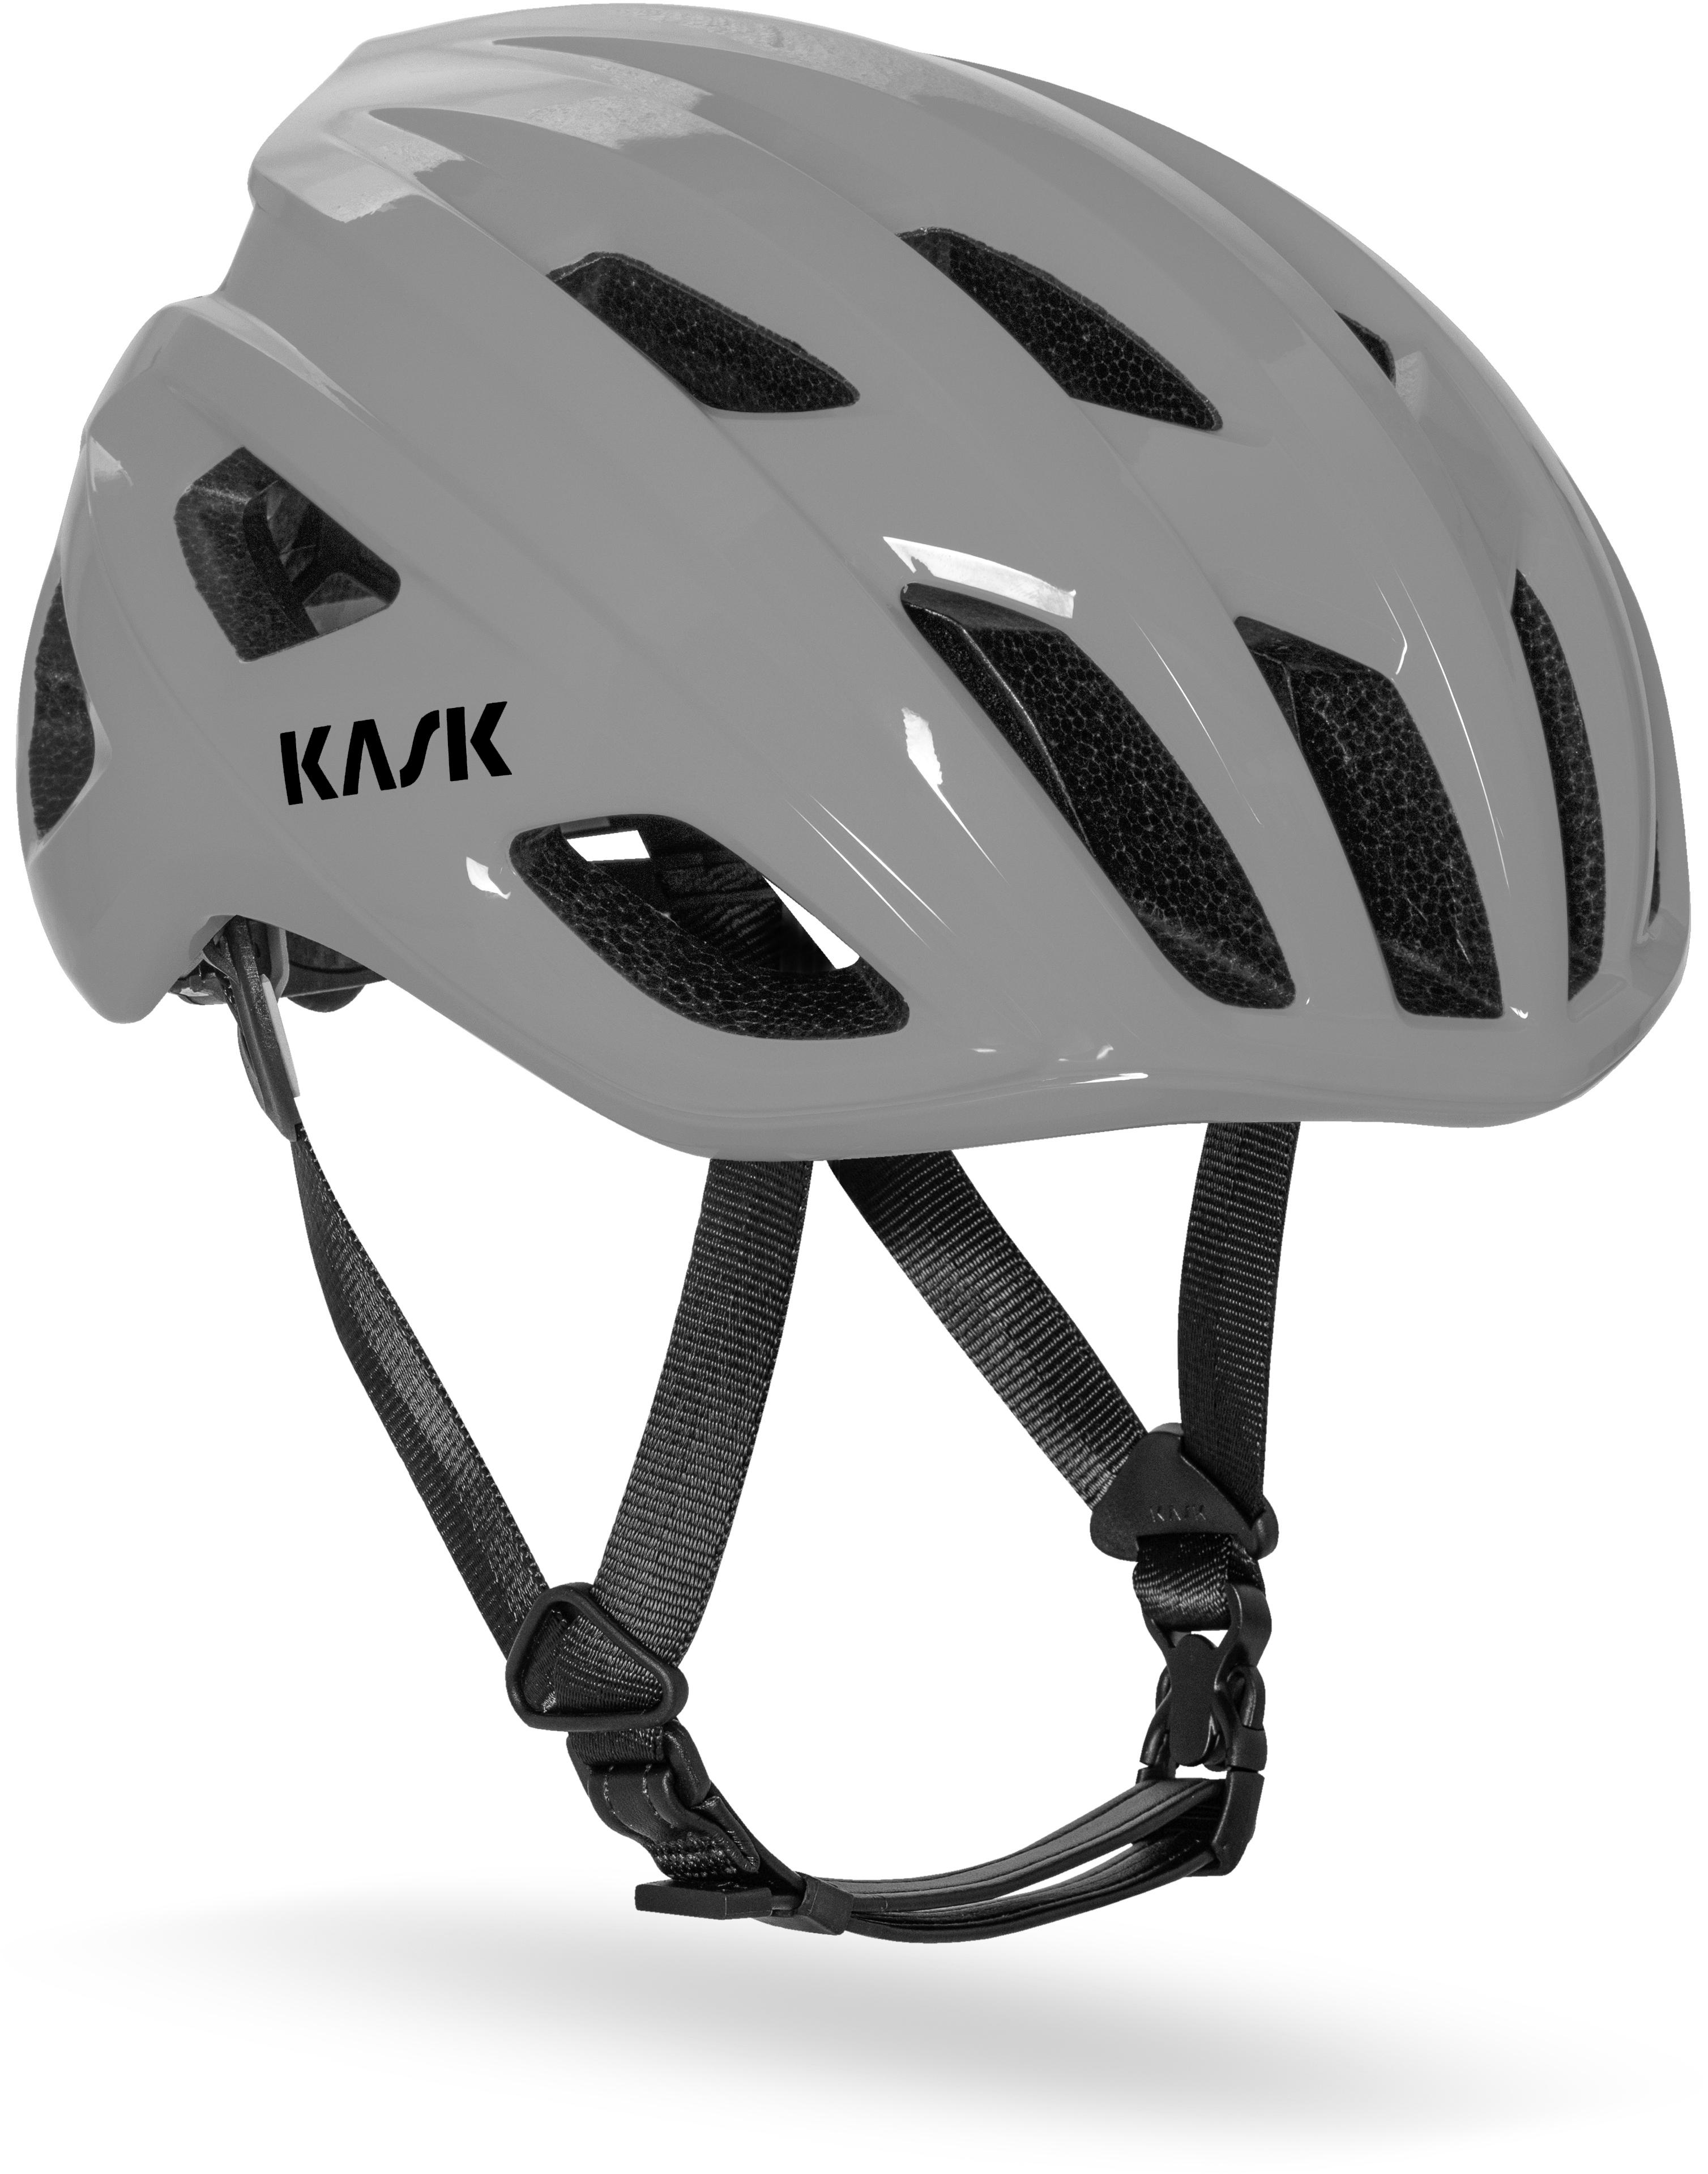 Kask Mojito Wg11 Road Helmet Grey, Medium